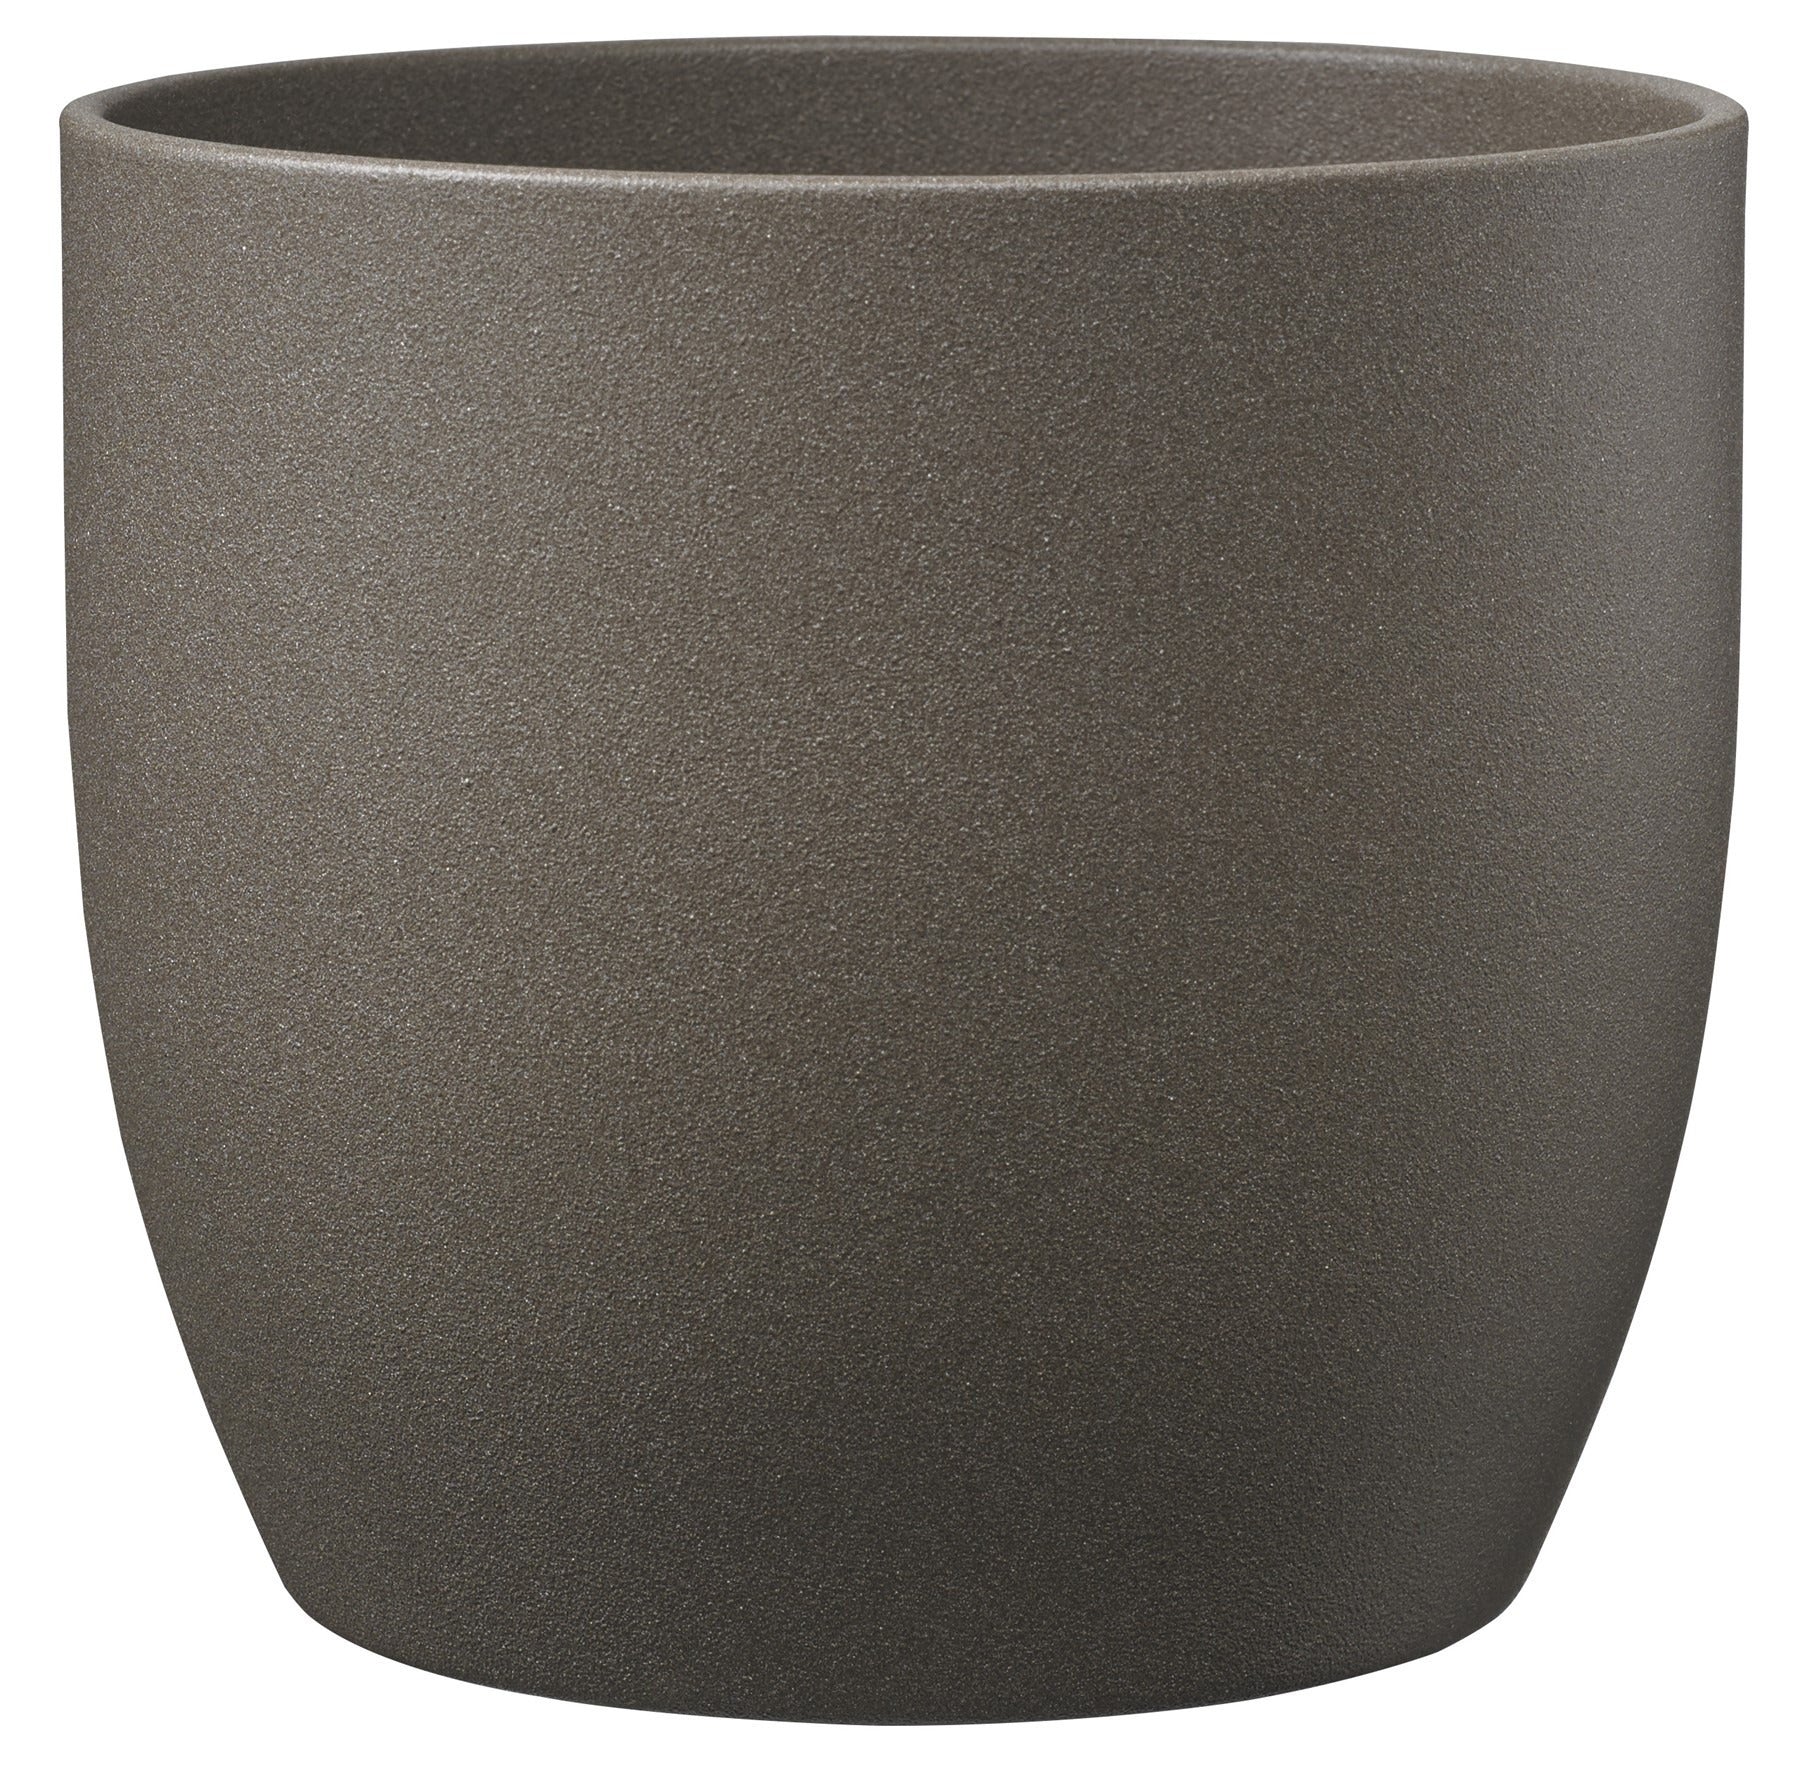 View Basel Stone Ceramic Pot Grey Brown 21cm information